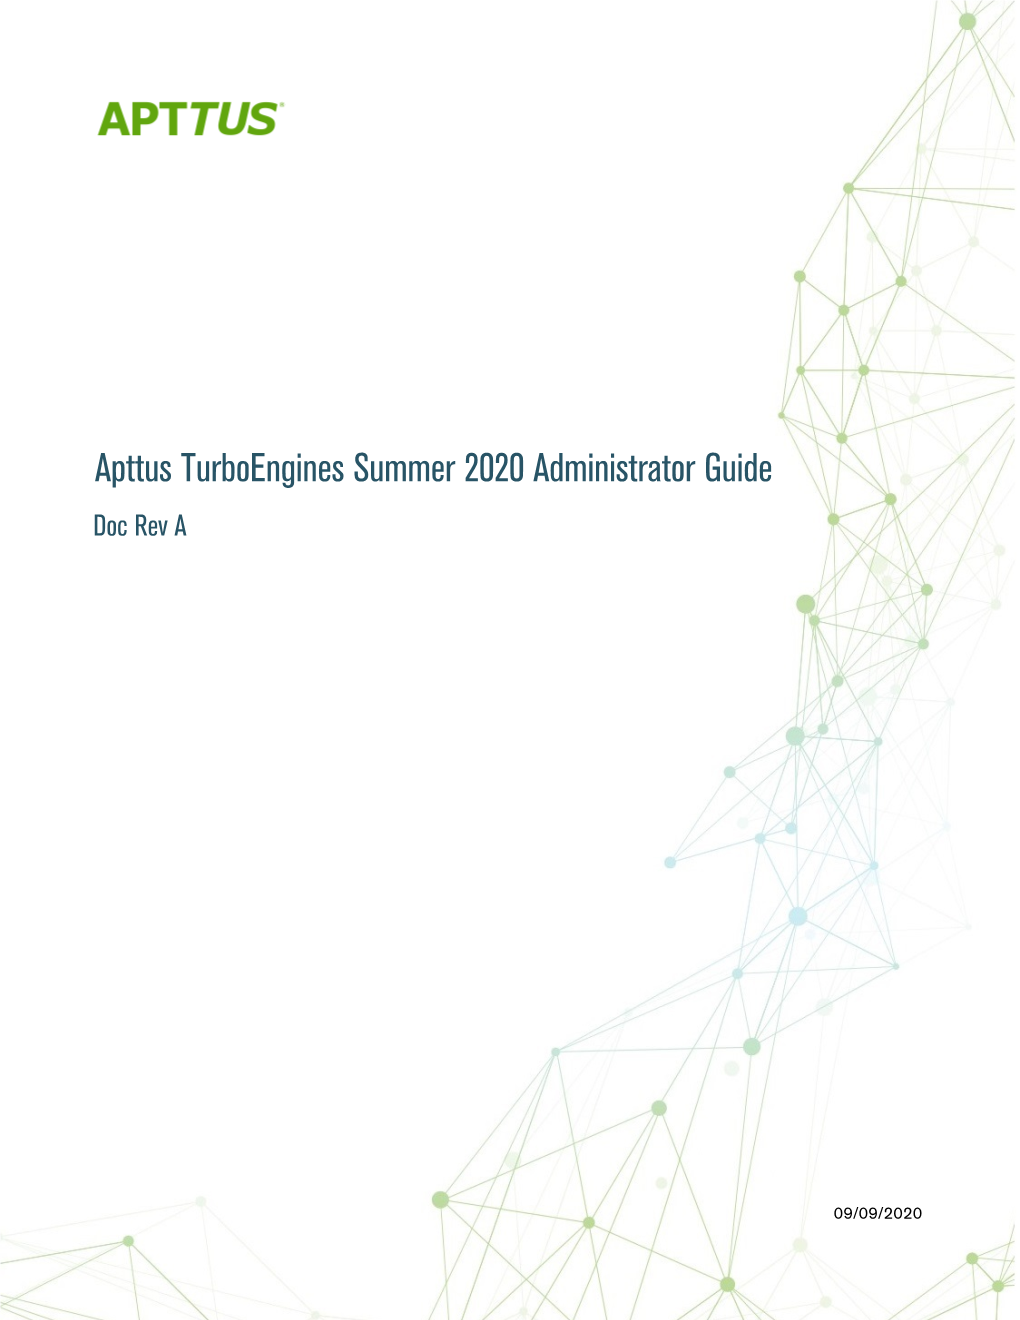 Apttus Turboengines Summer 2020 Administrator Guide Doc Rev A